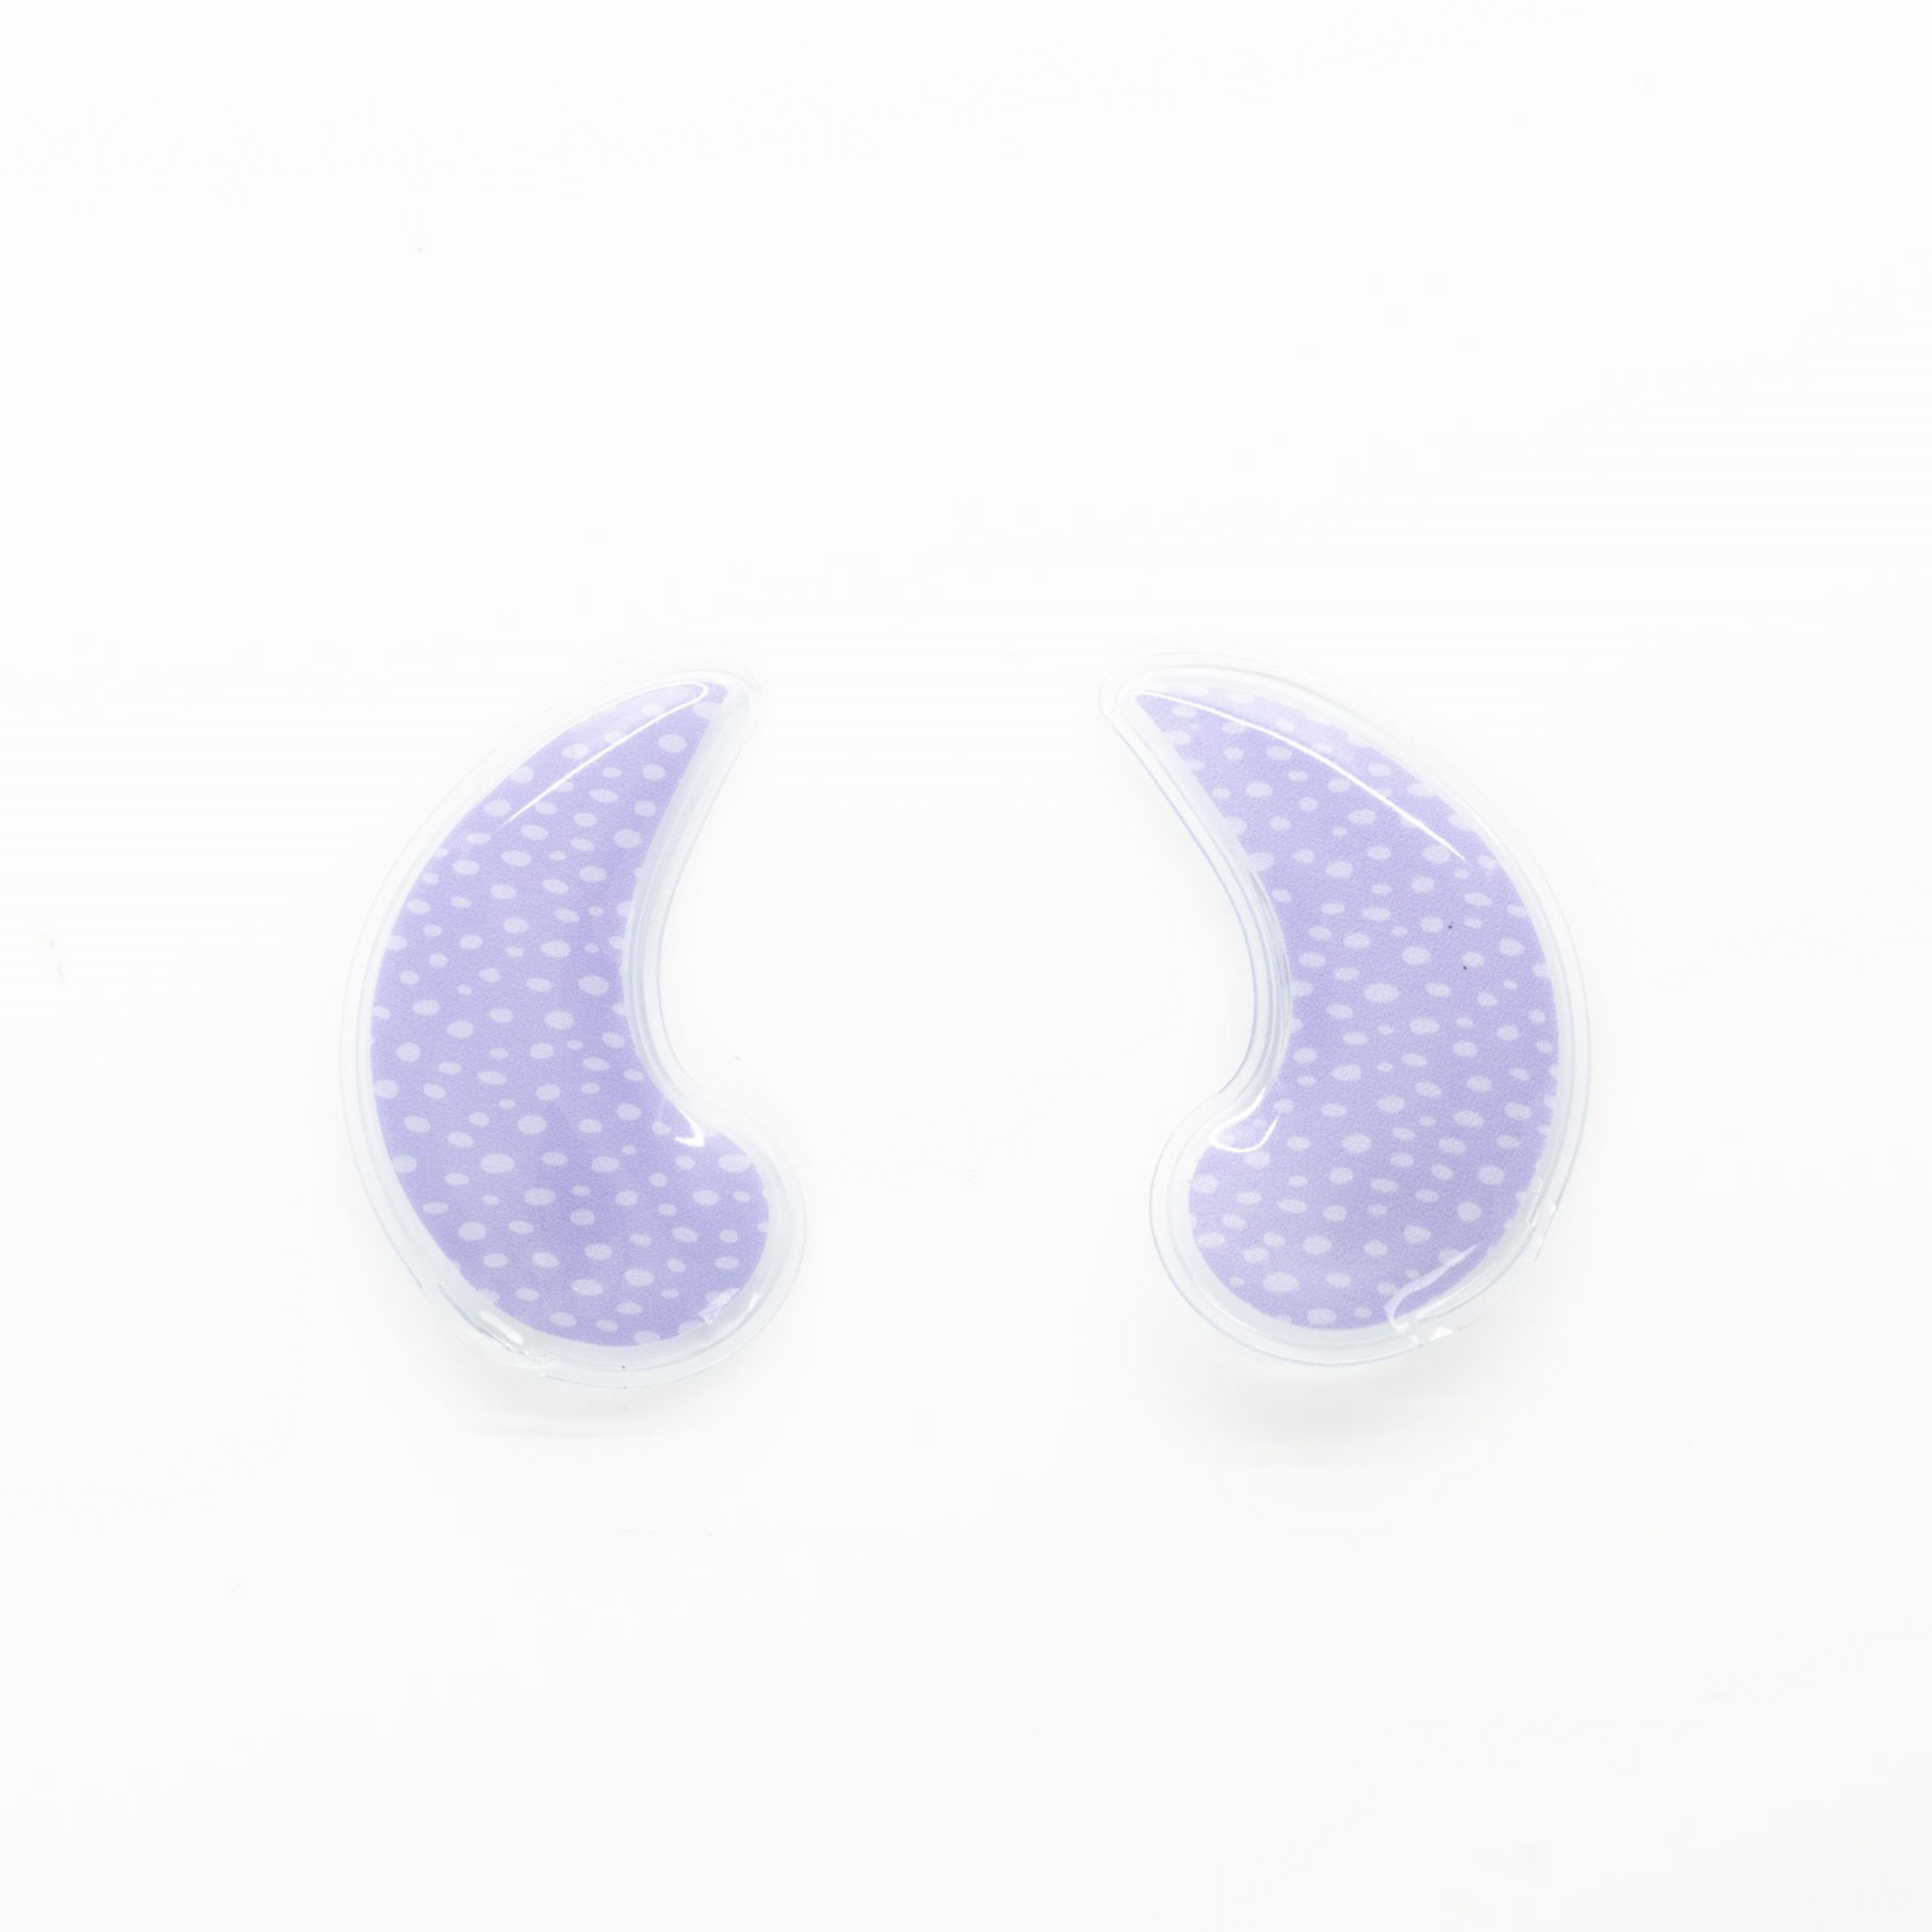 Under eye gel pads in purple dot print